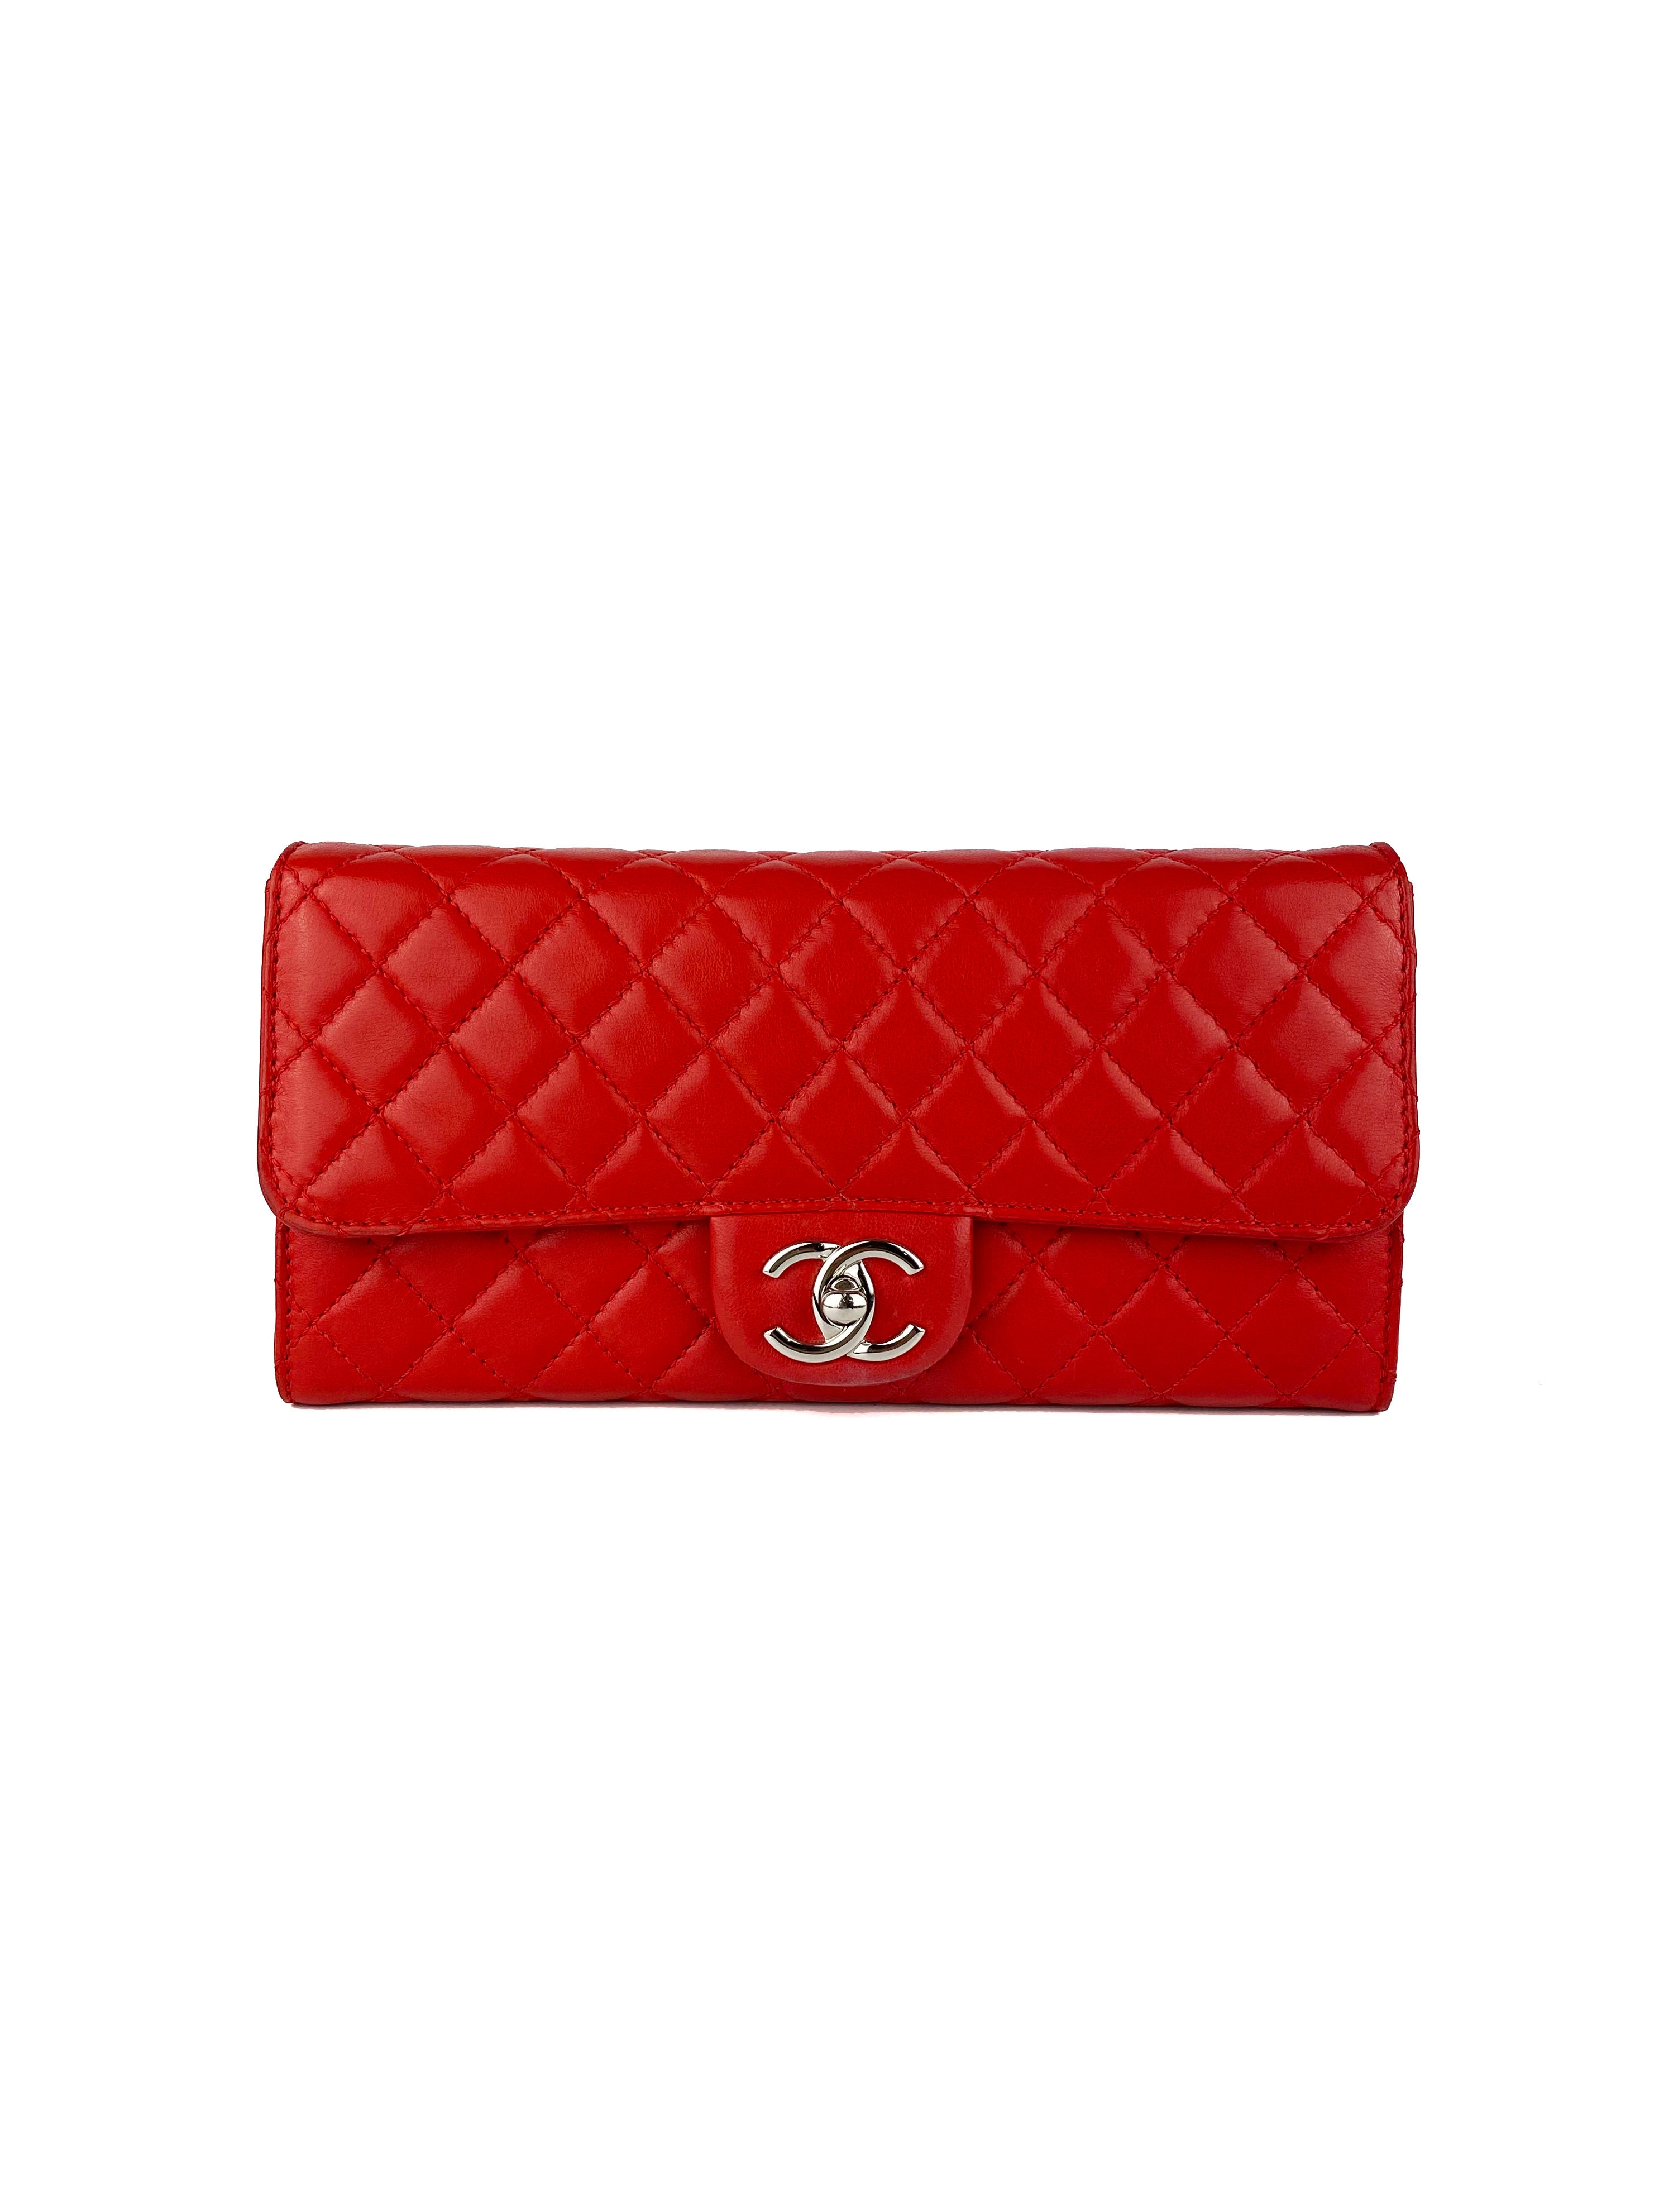 Chanel Red Lambskin Classic Flap Clutch